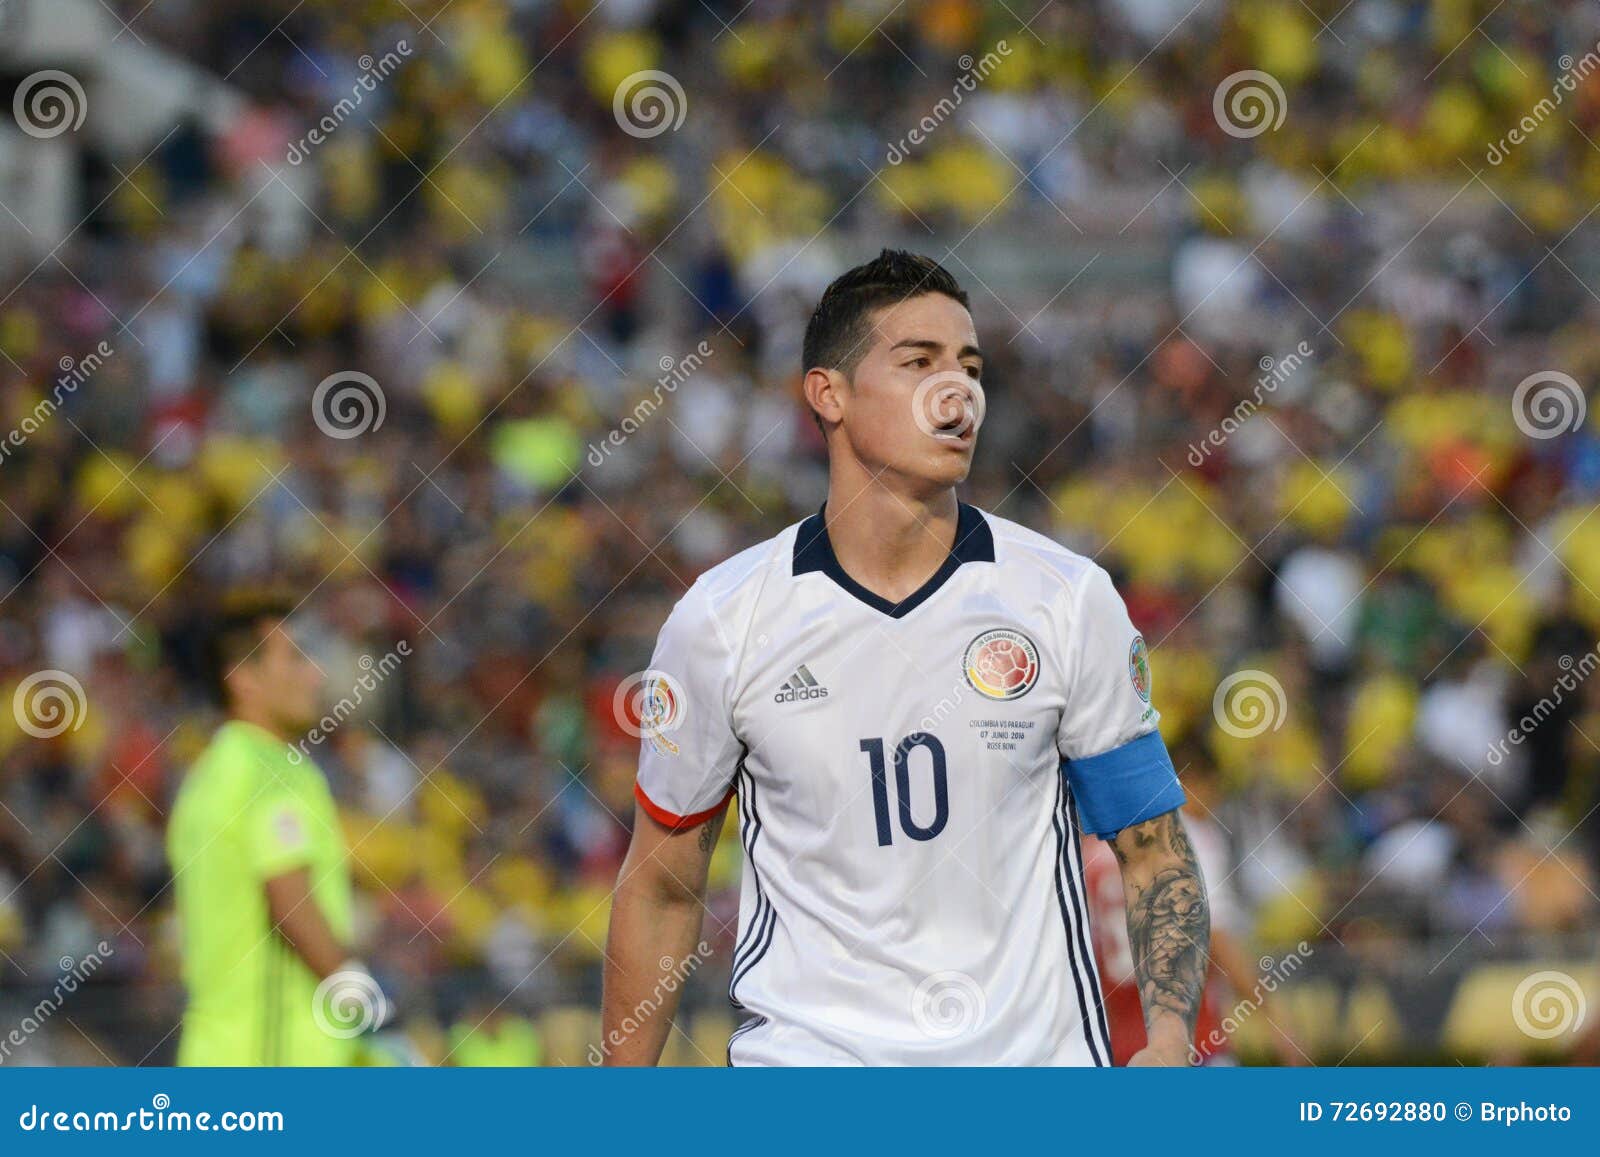 James Rodriguez During Copa America Centenario Editorial Image Image Of Football Game 72692880